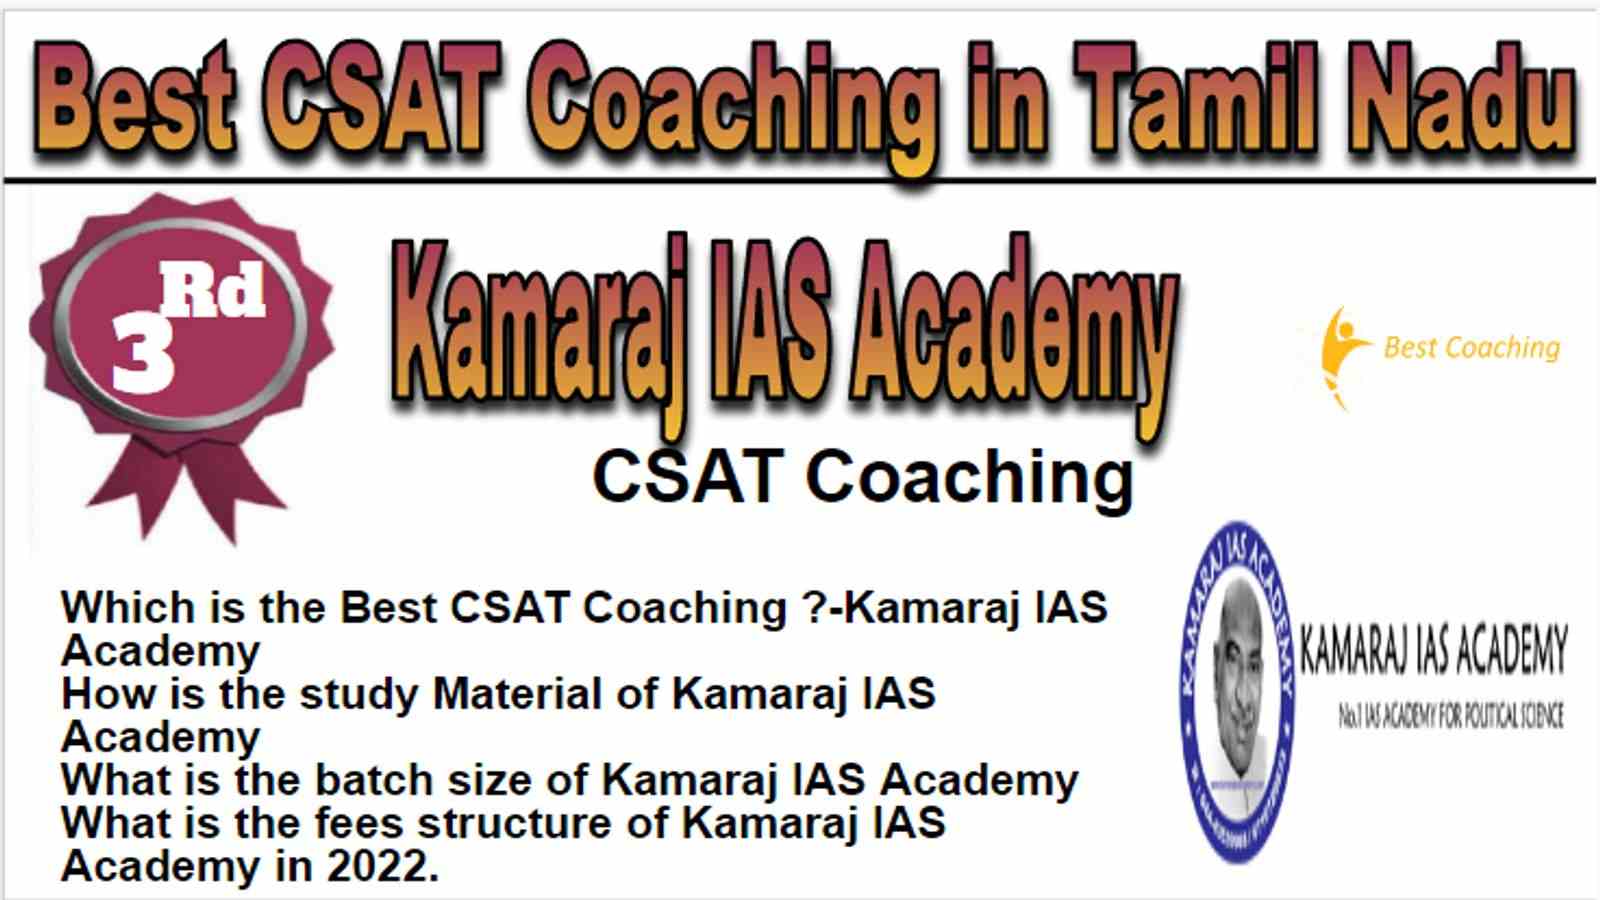 Rank 3 Best CSAT Coaching in Tamil Nadu